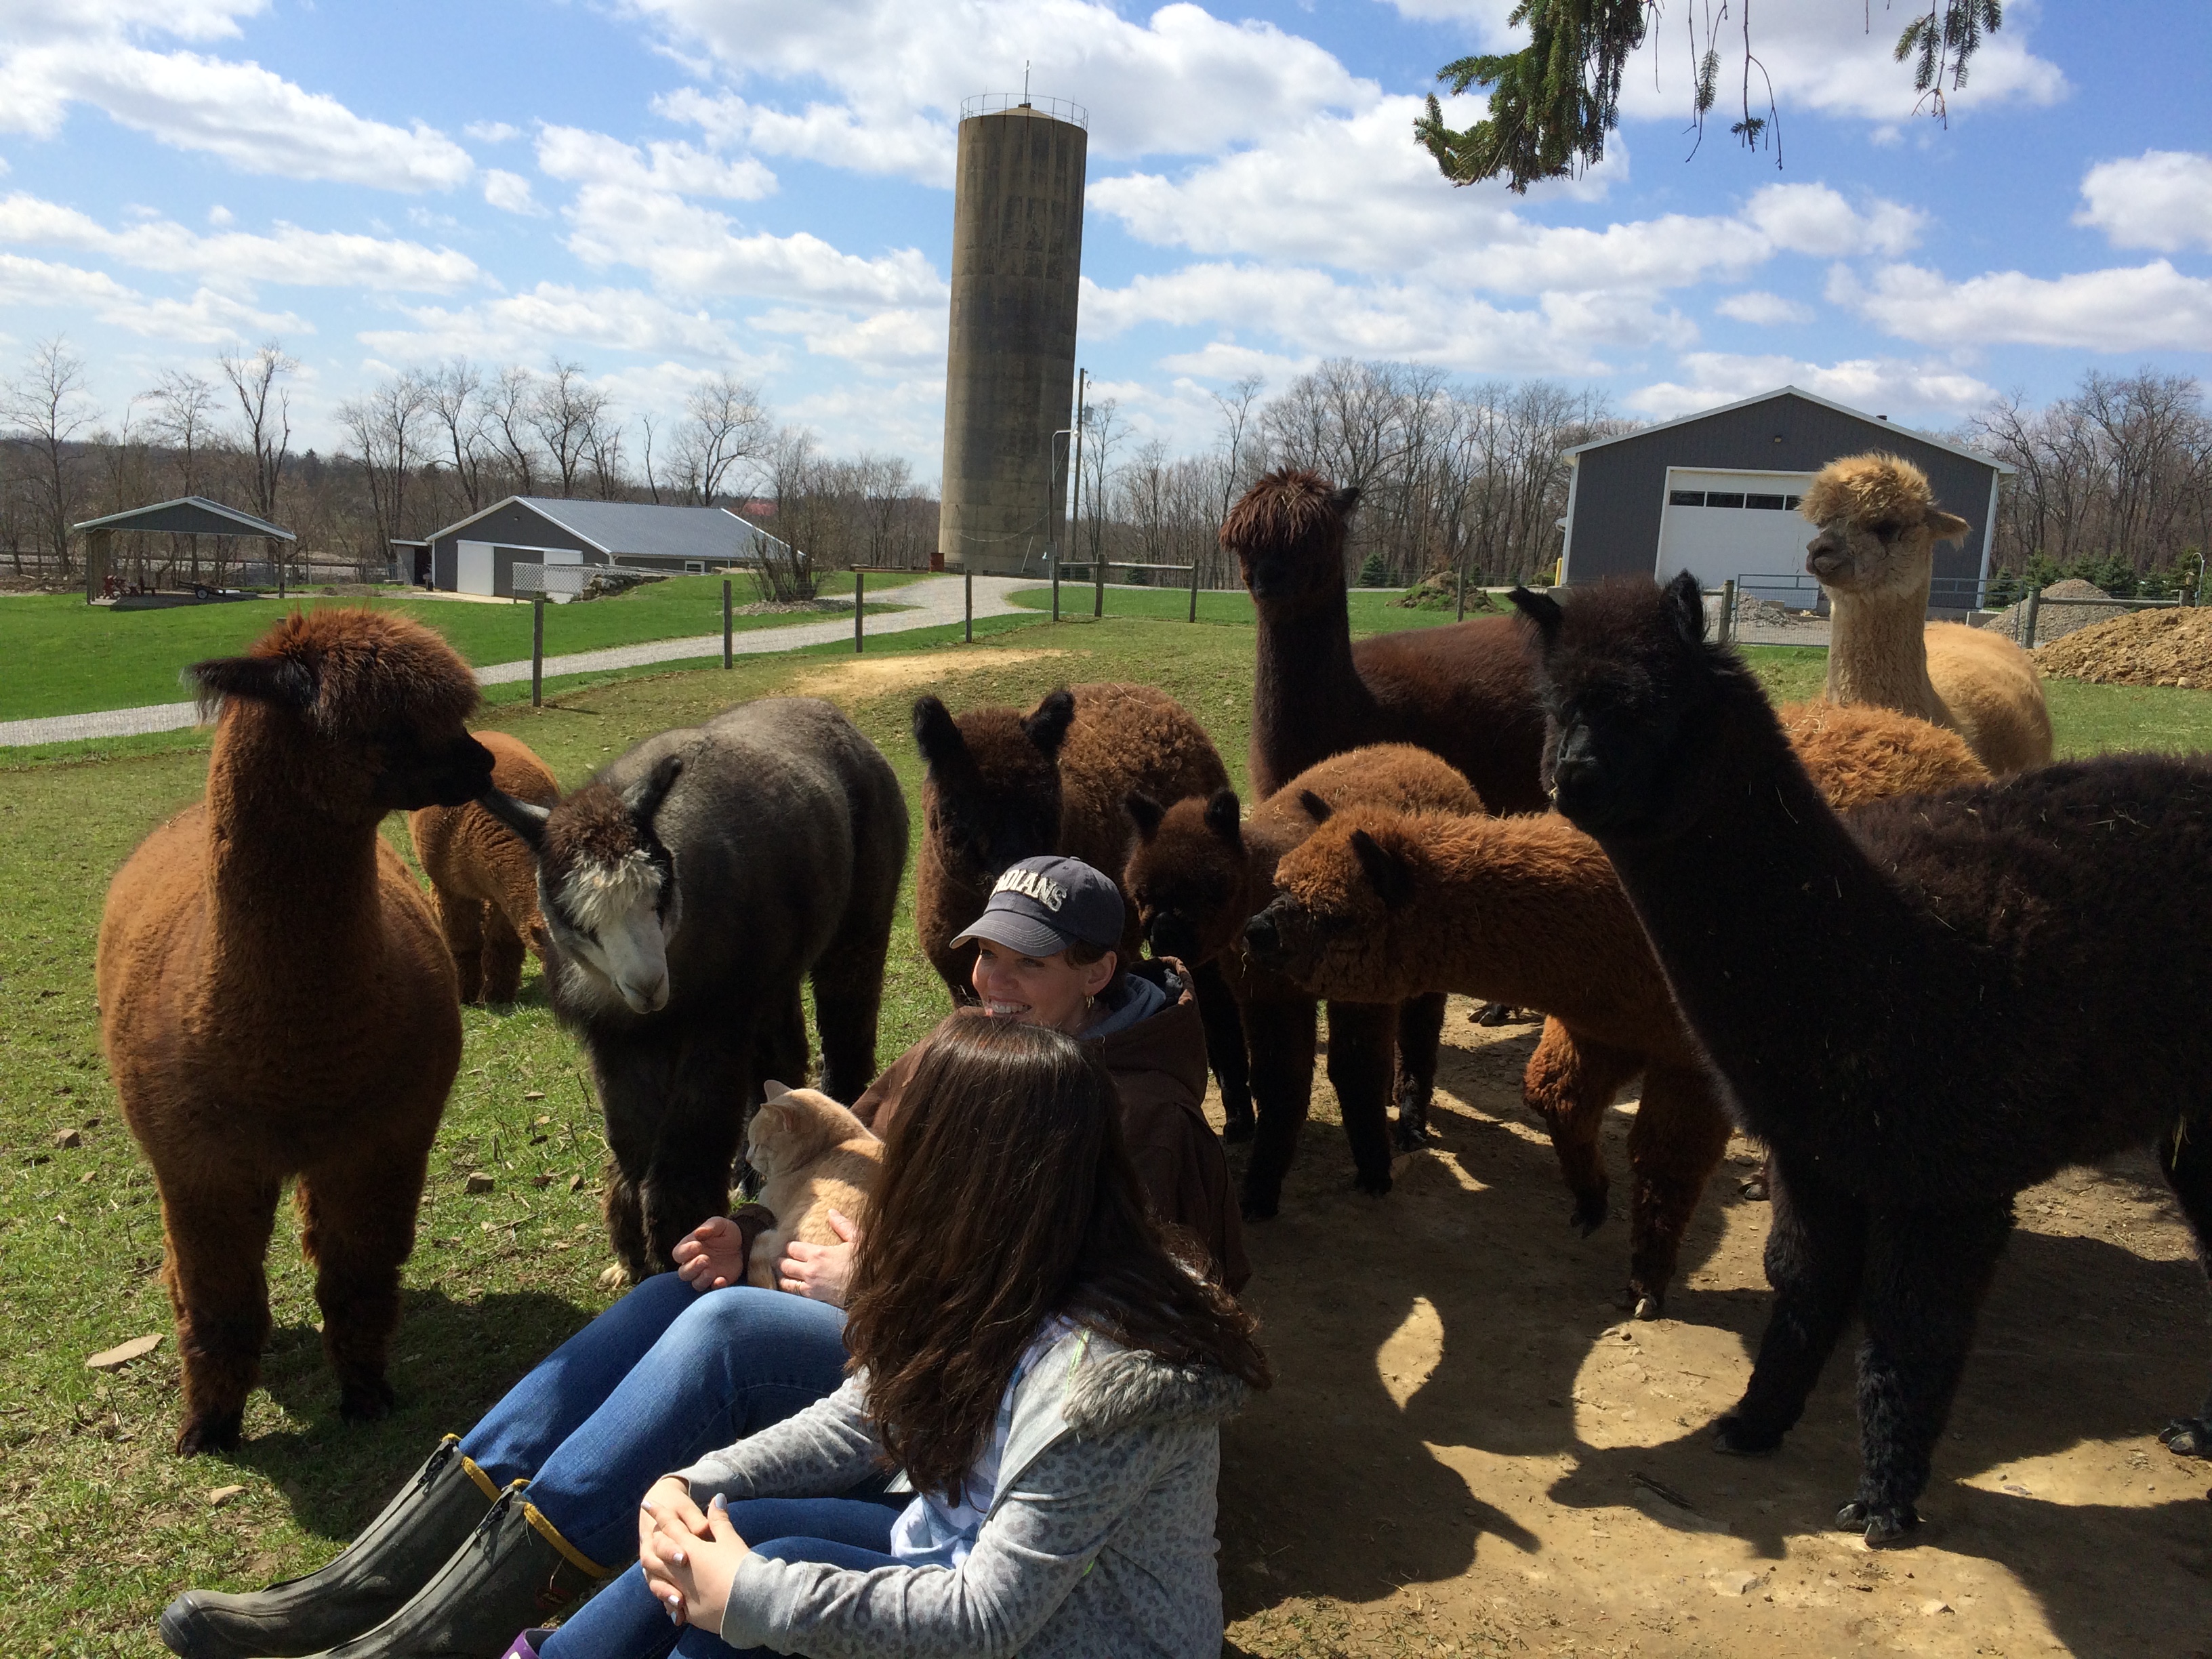 Enjoying alpacas - April 2015